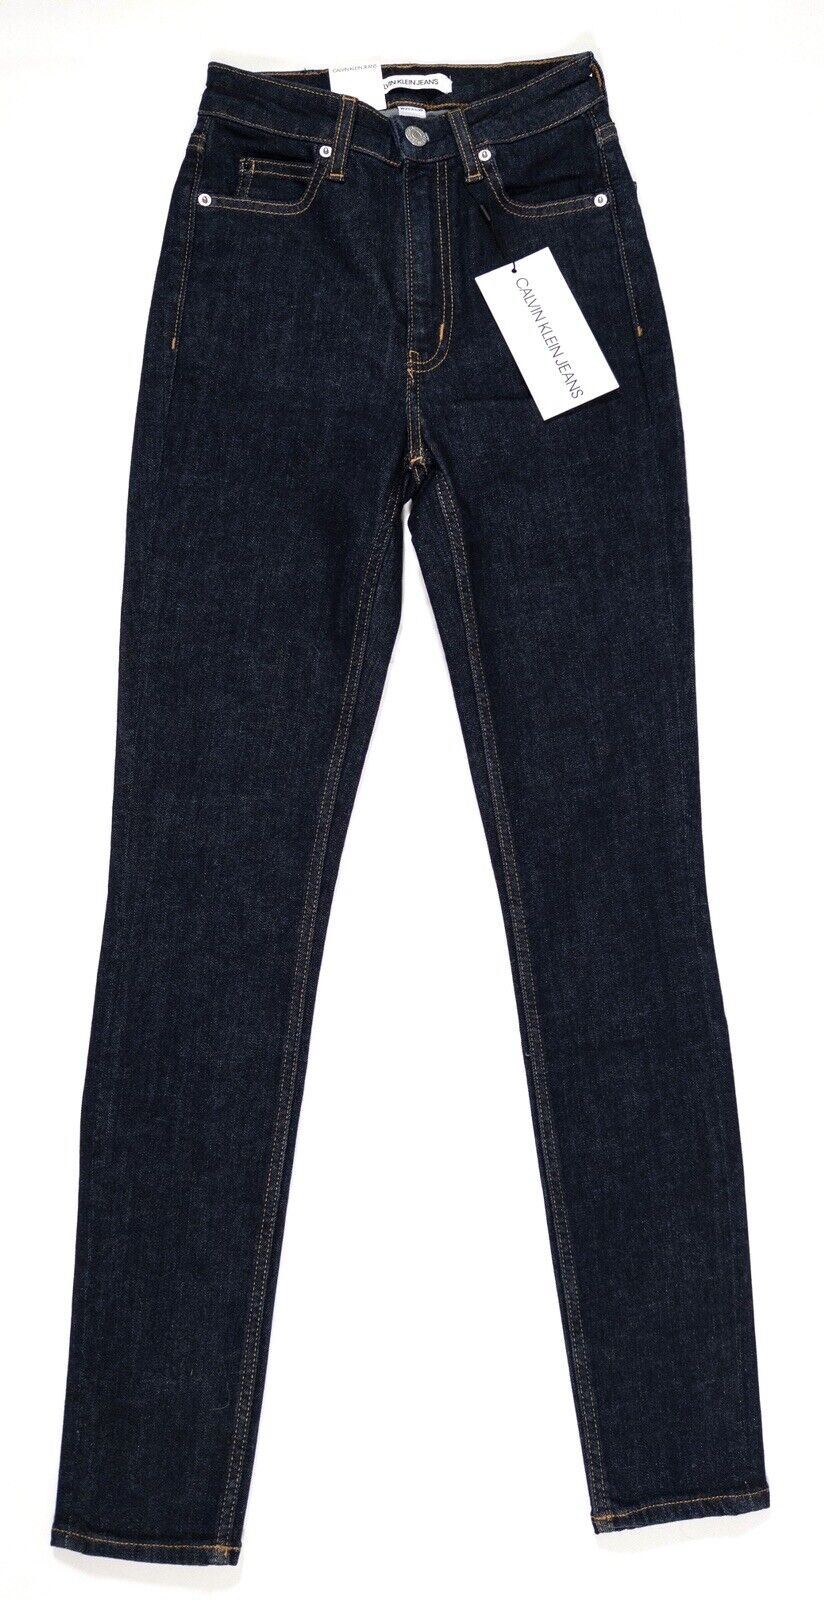 CALVIN KLEIN Women's Dark Blue Jeans High Rise Skinny Size UK W25 L30